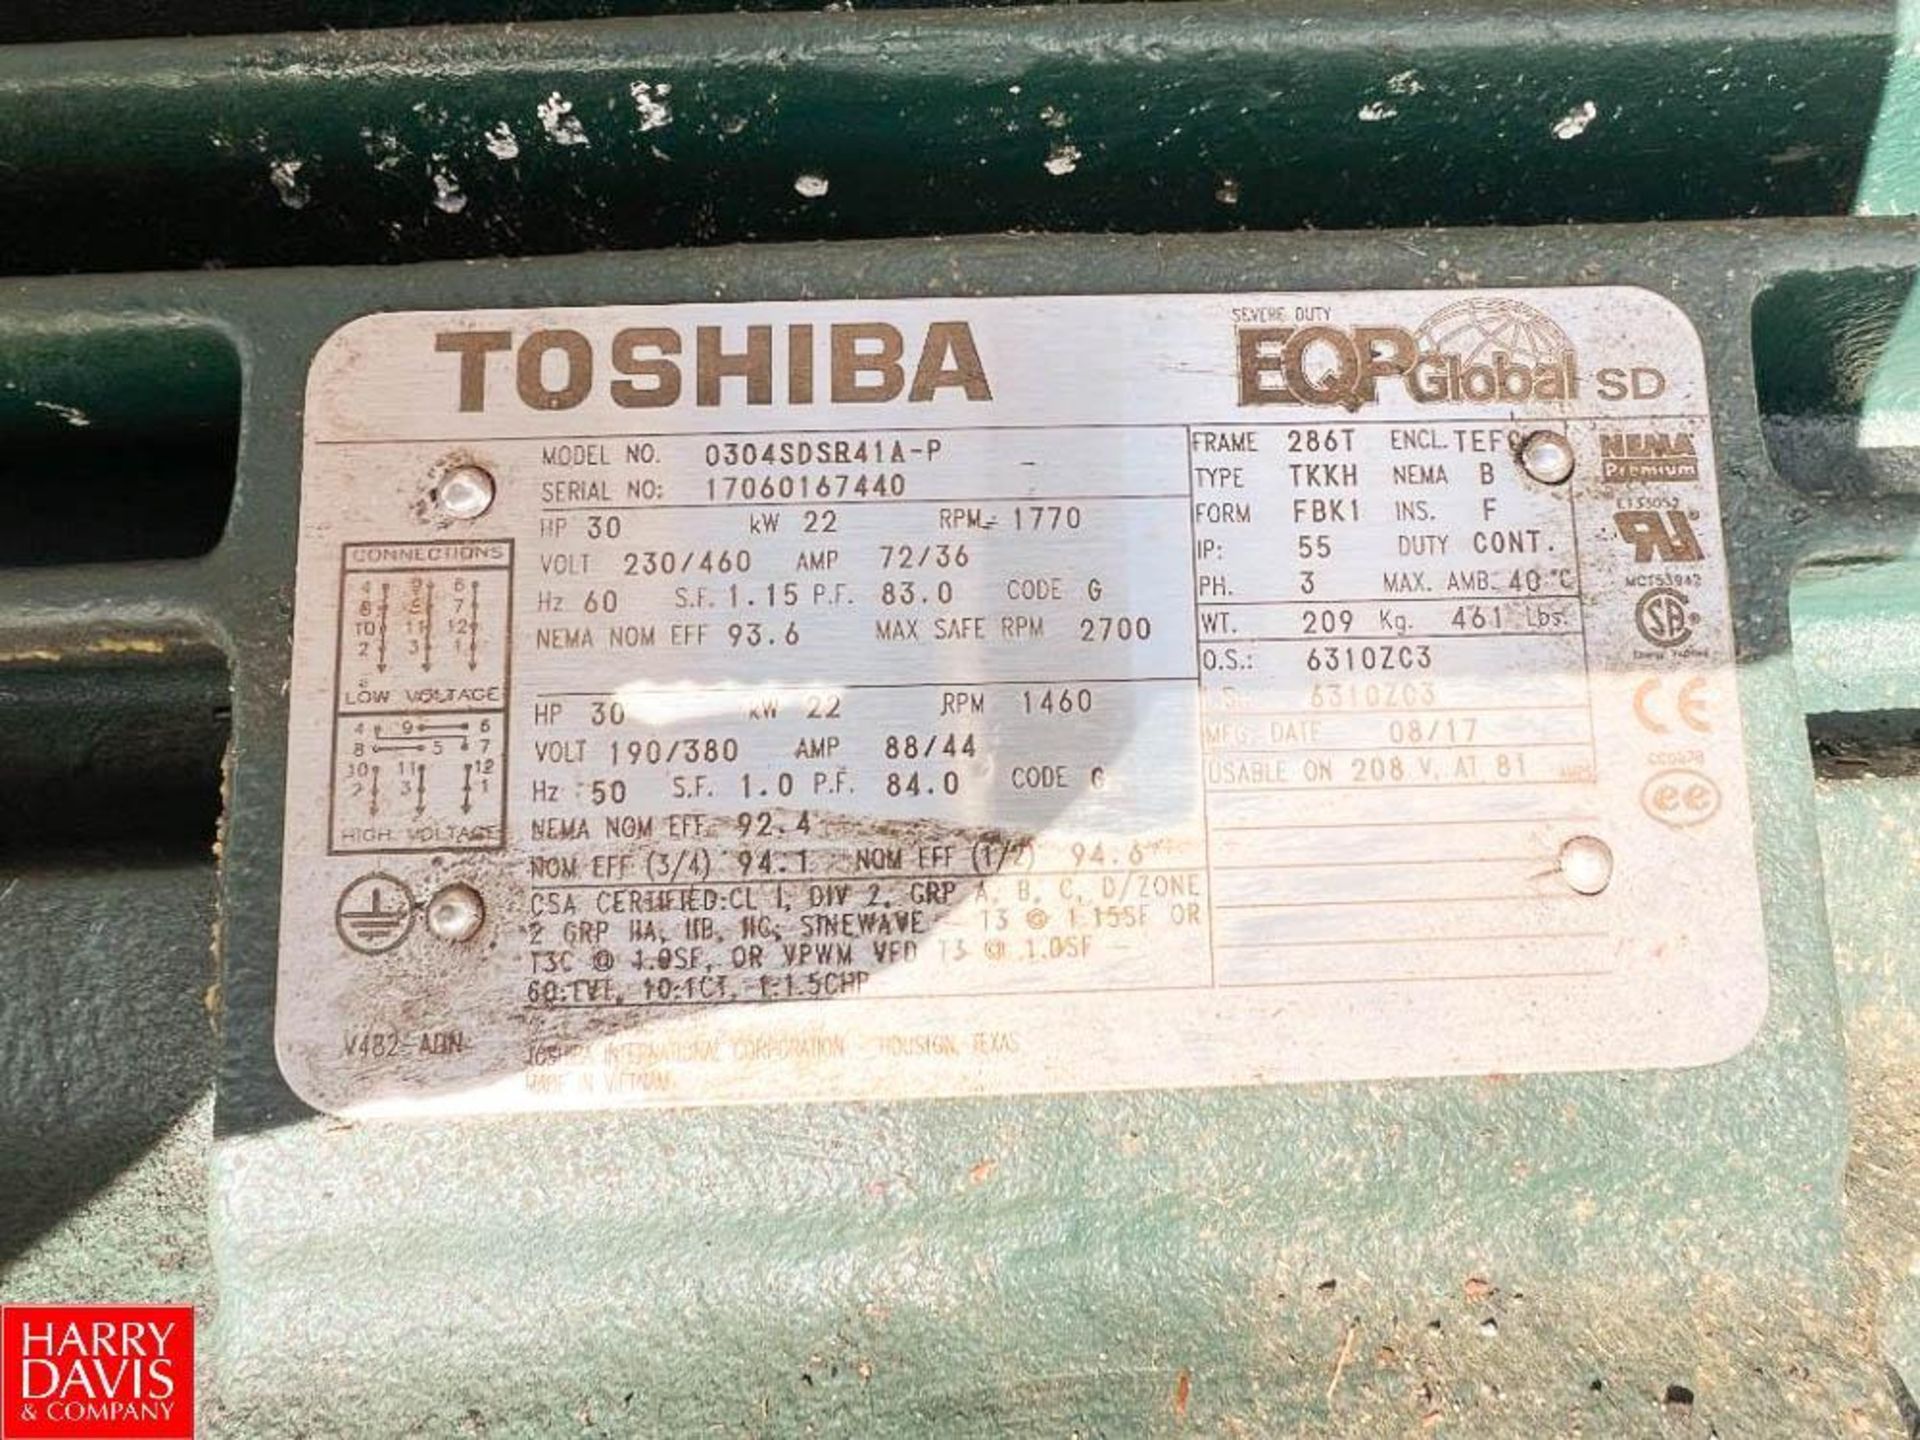 Toshiba 30 HP 1,770 RPM Motor - Rigging Fee: $75 - Image 2 of 2